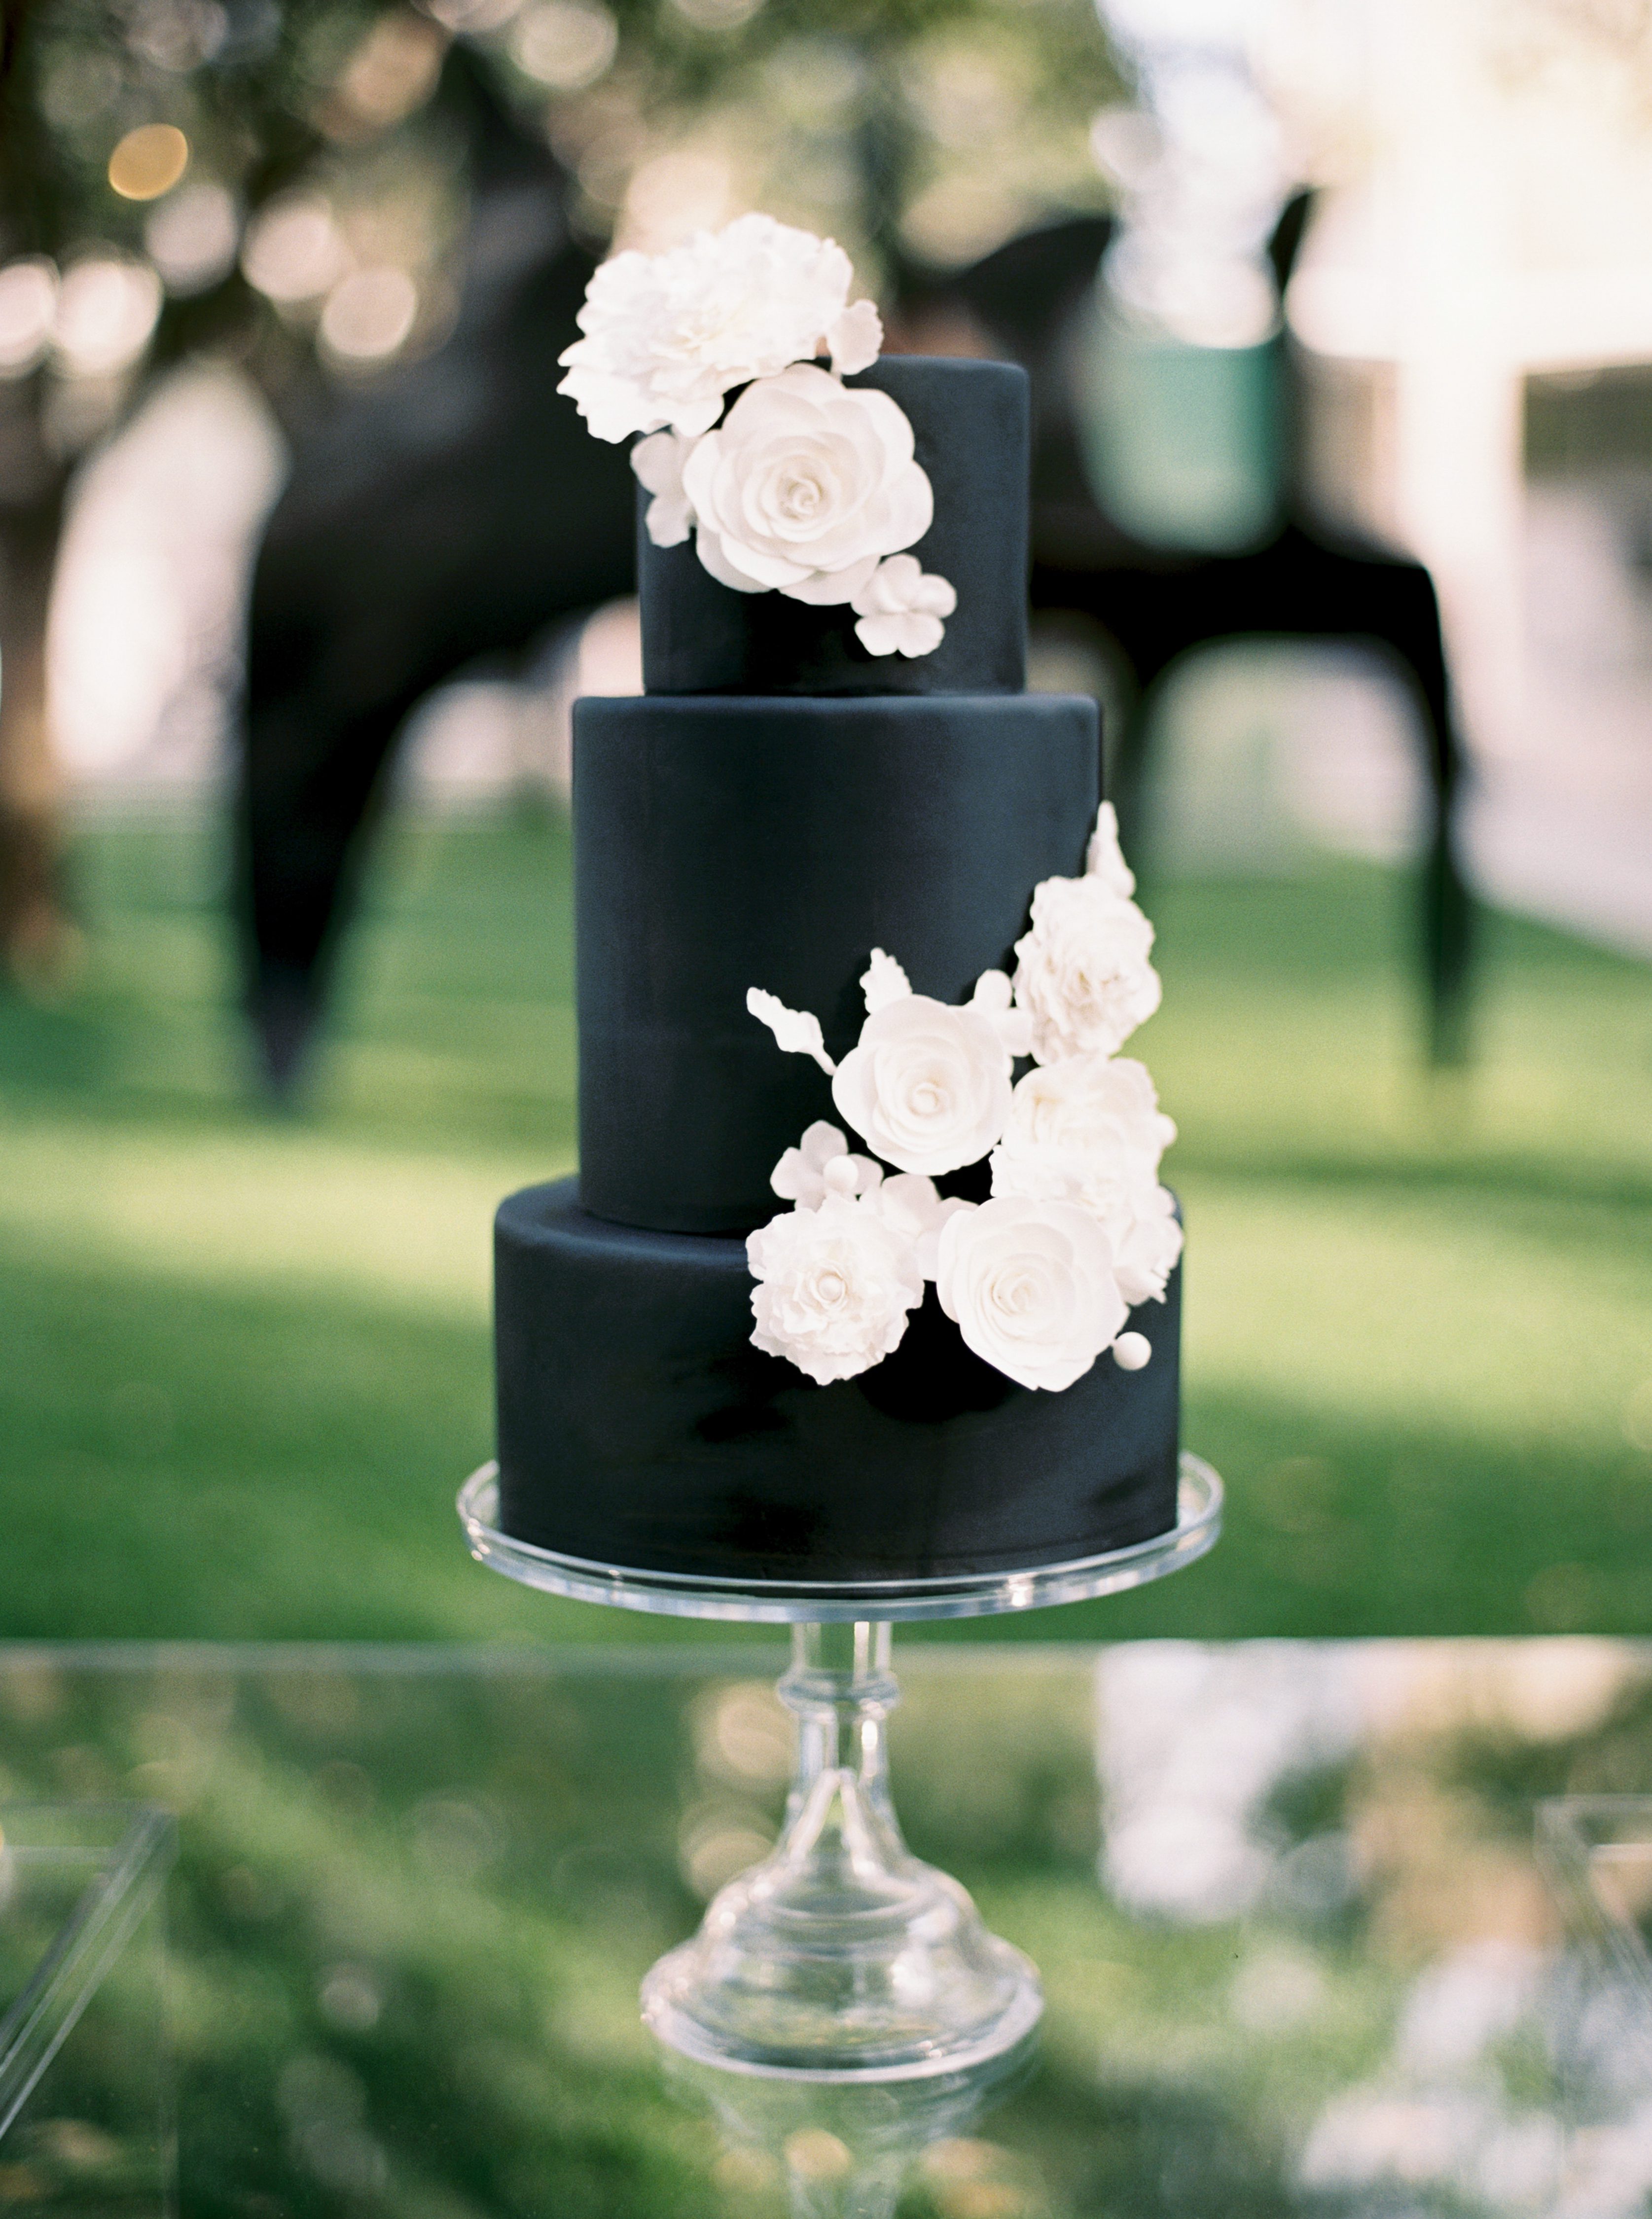 Black wedding cake with white sugar flowers